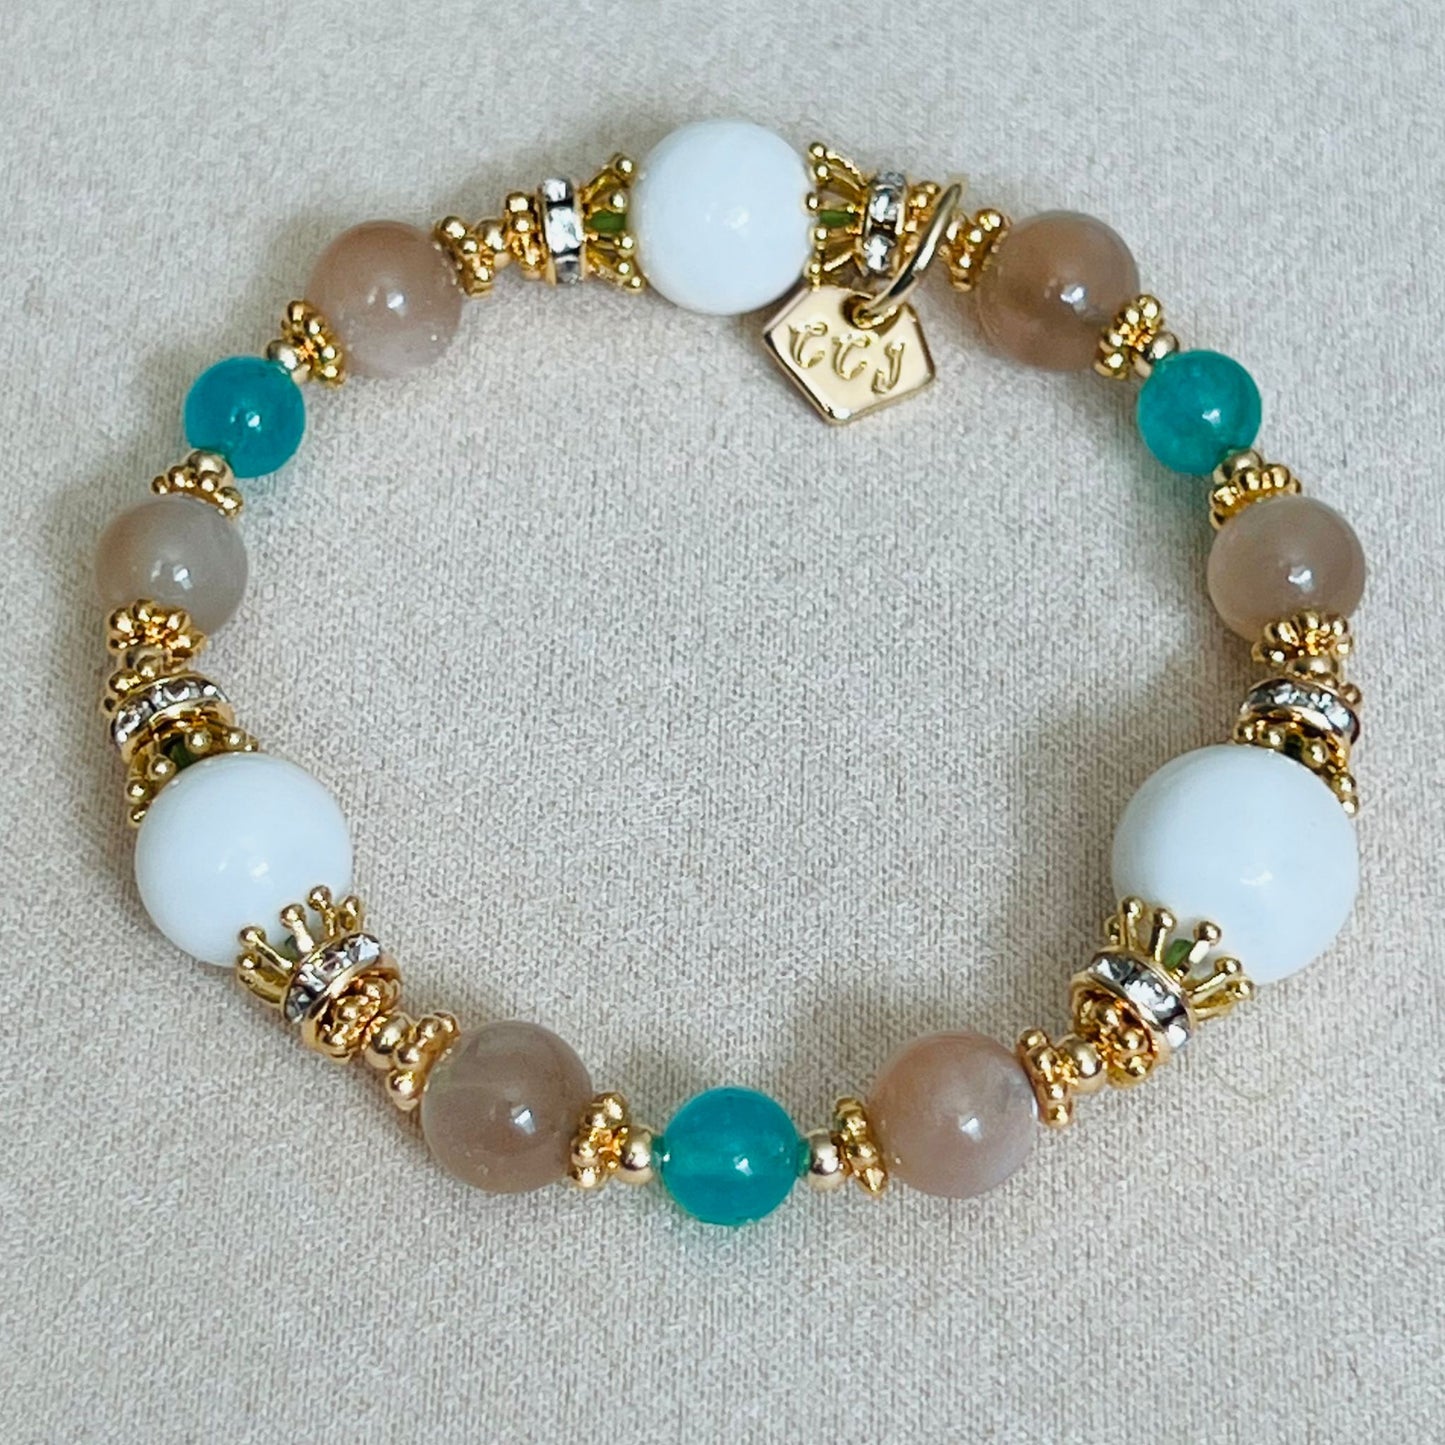 White Coral, Moonlight Sunstone & Amazonite Bracelet